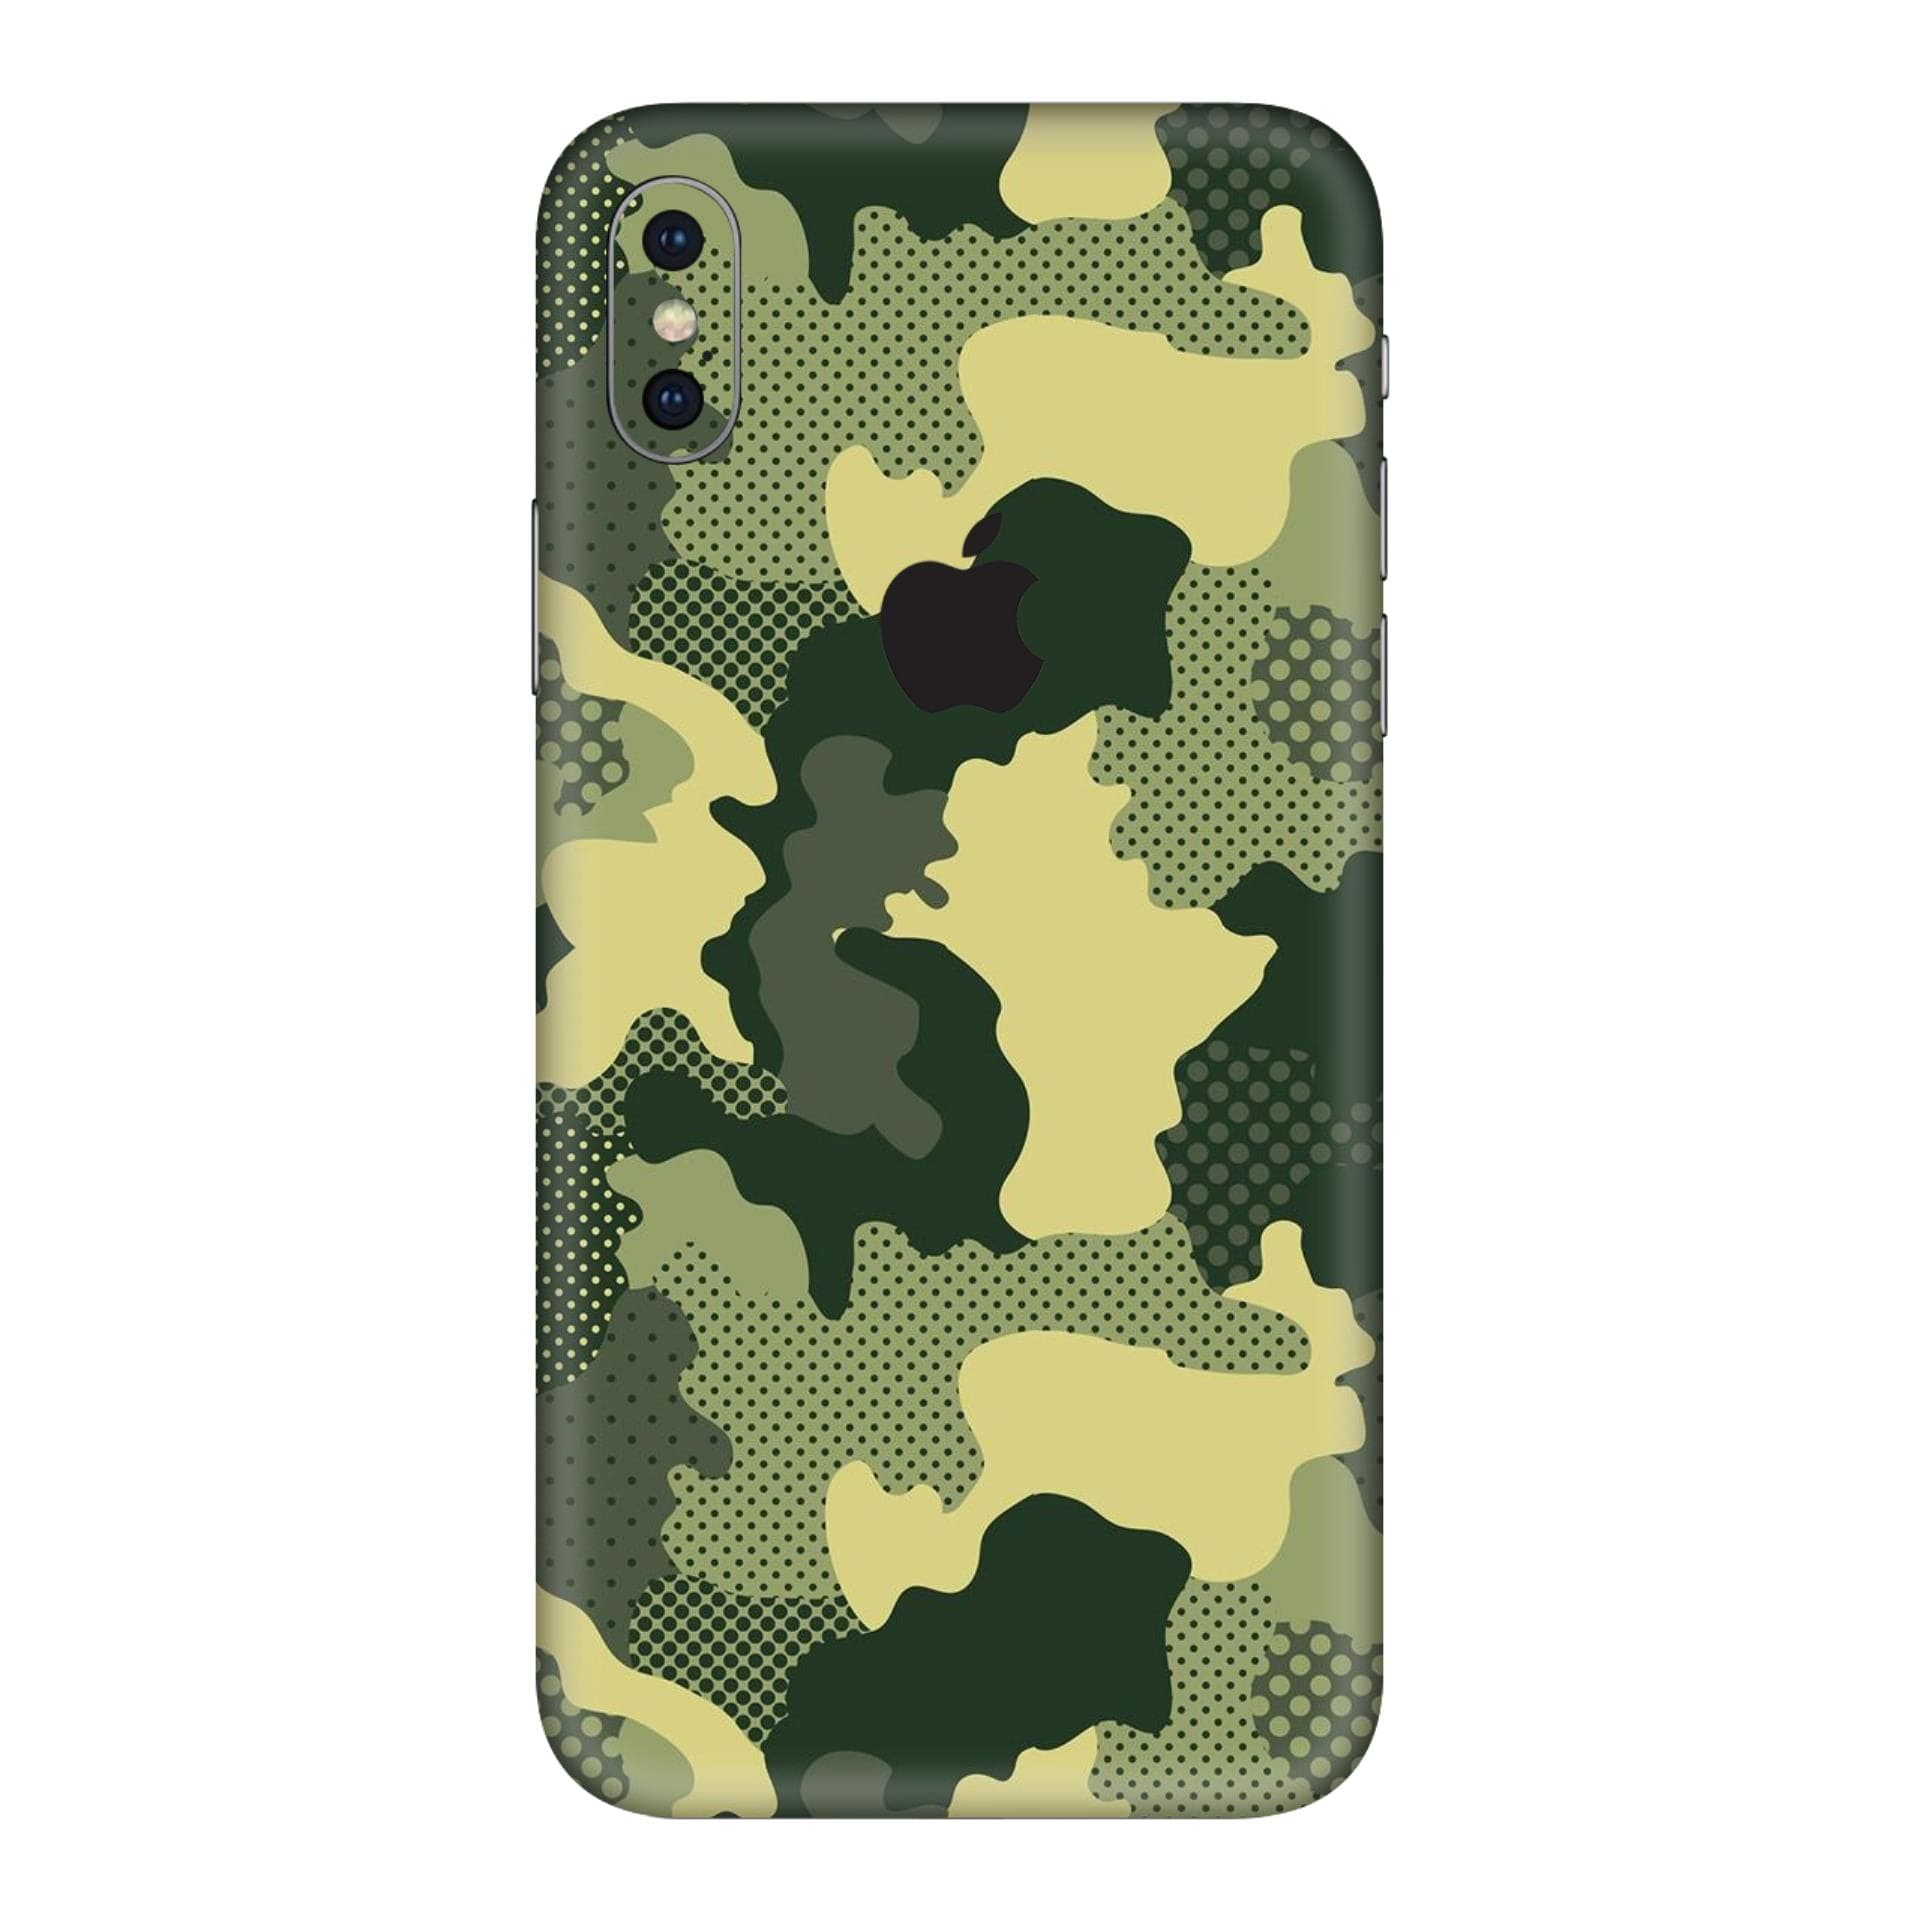 iphone X Military Green Camo skins